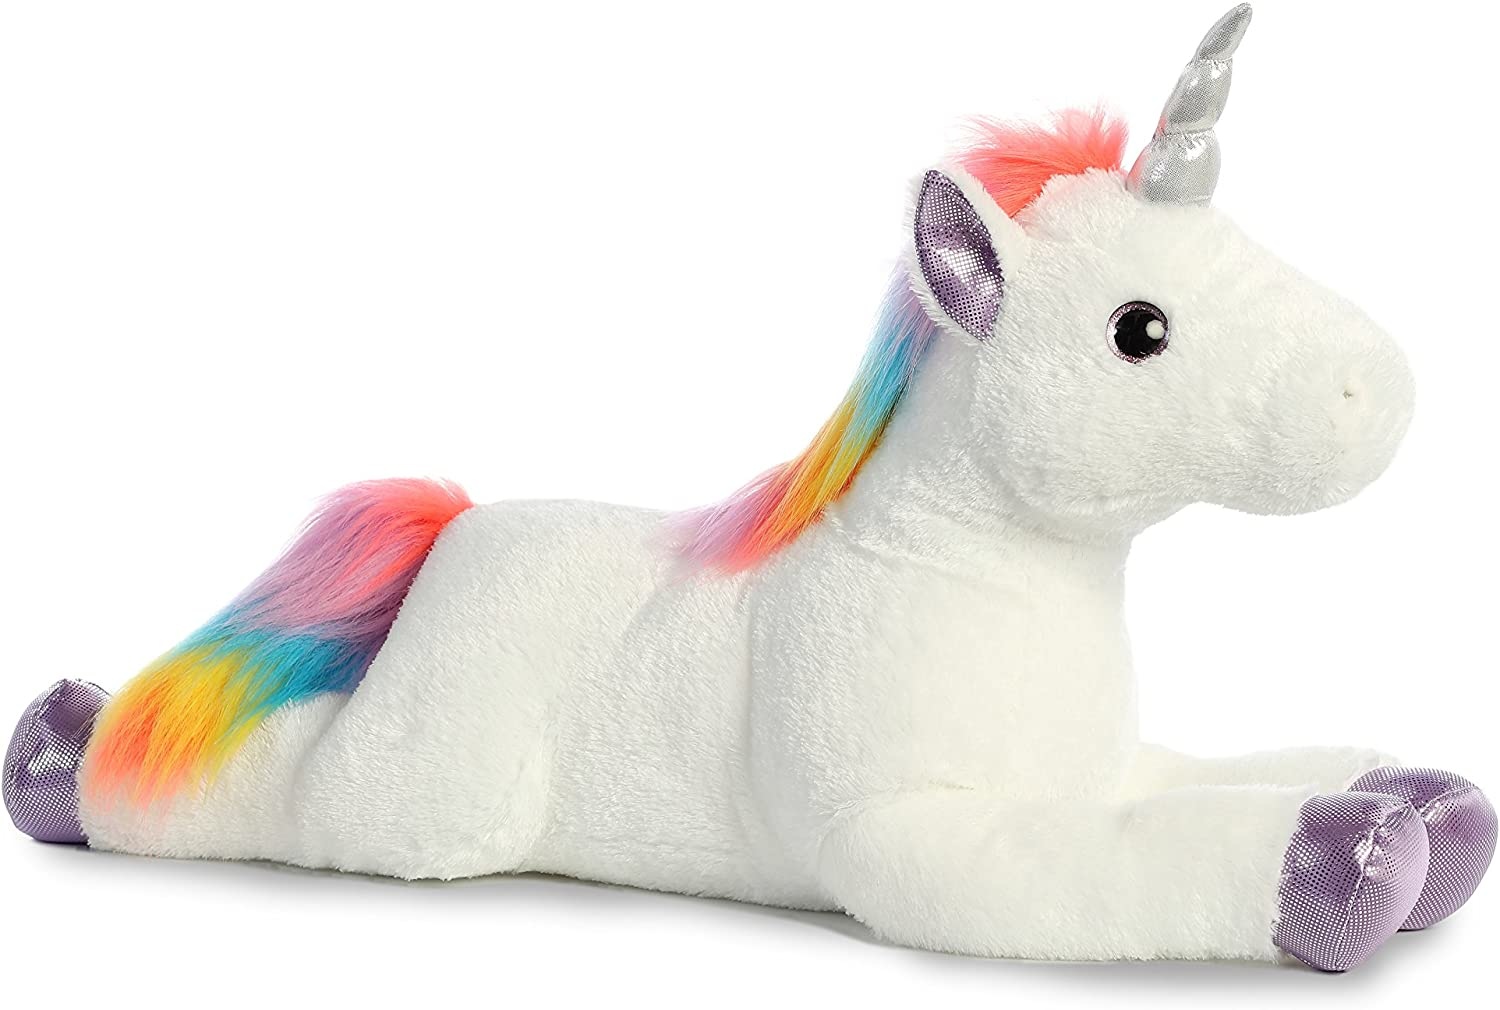 Dormi Locos s3 large rainbow unicorn : : Toys